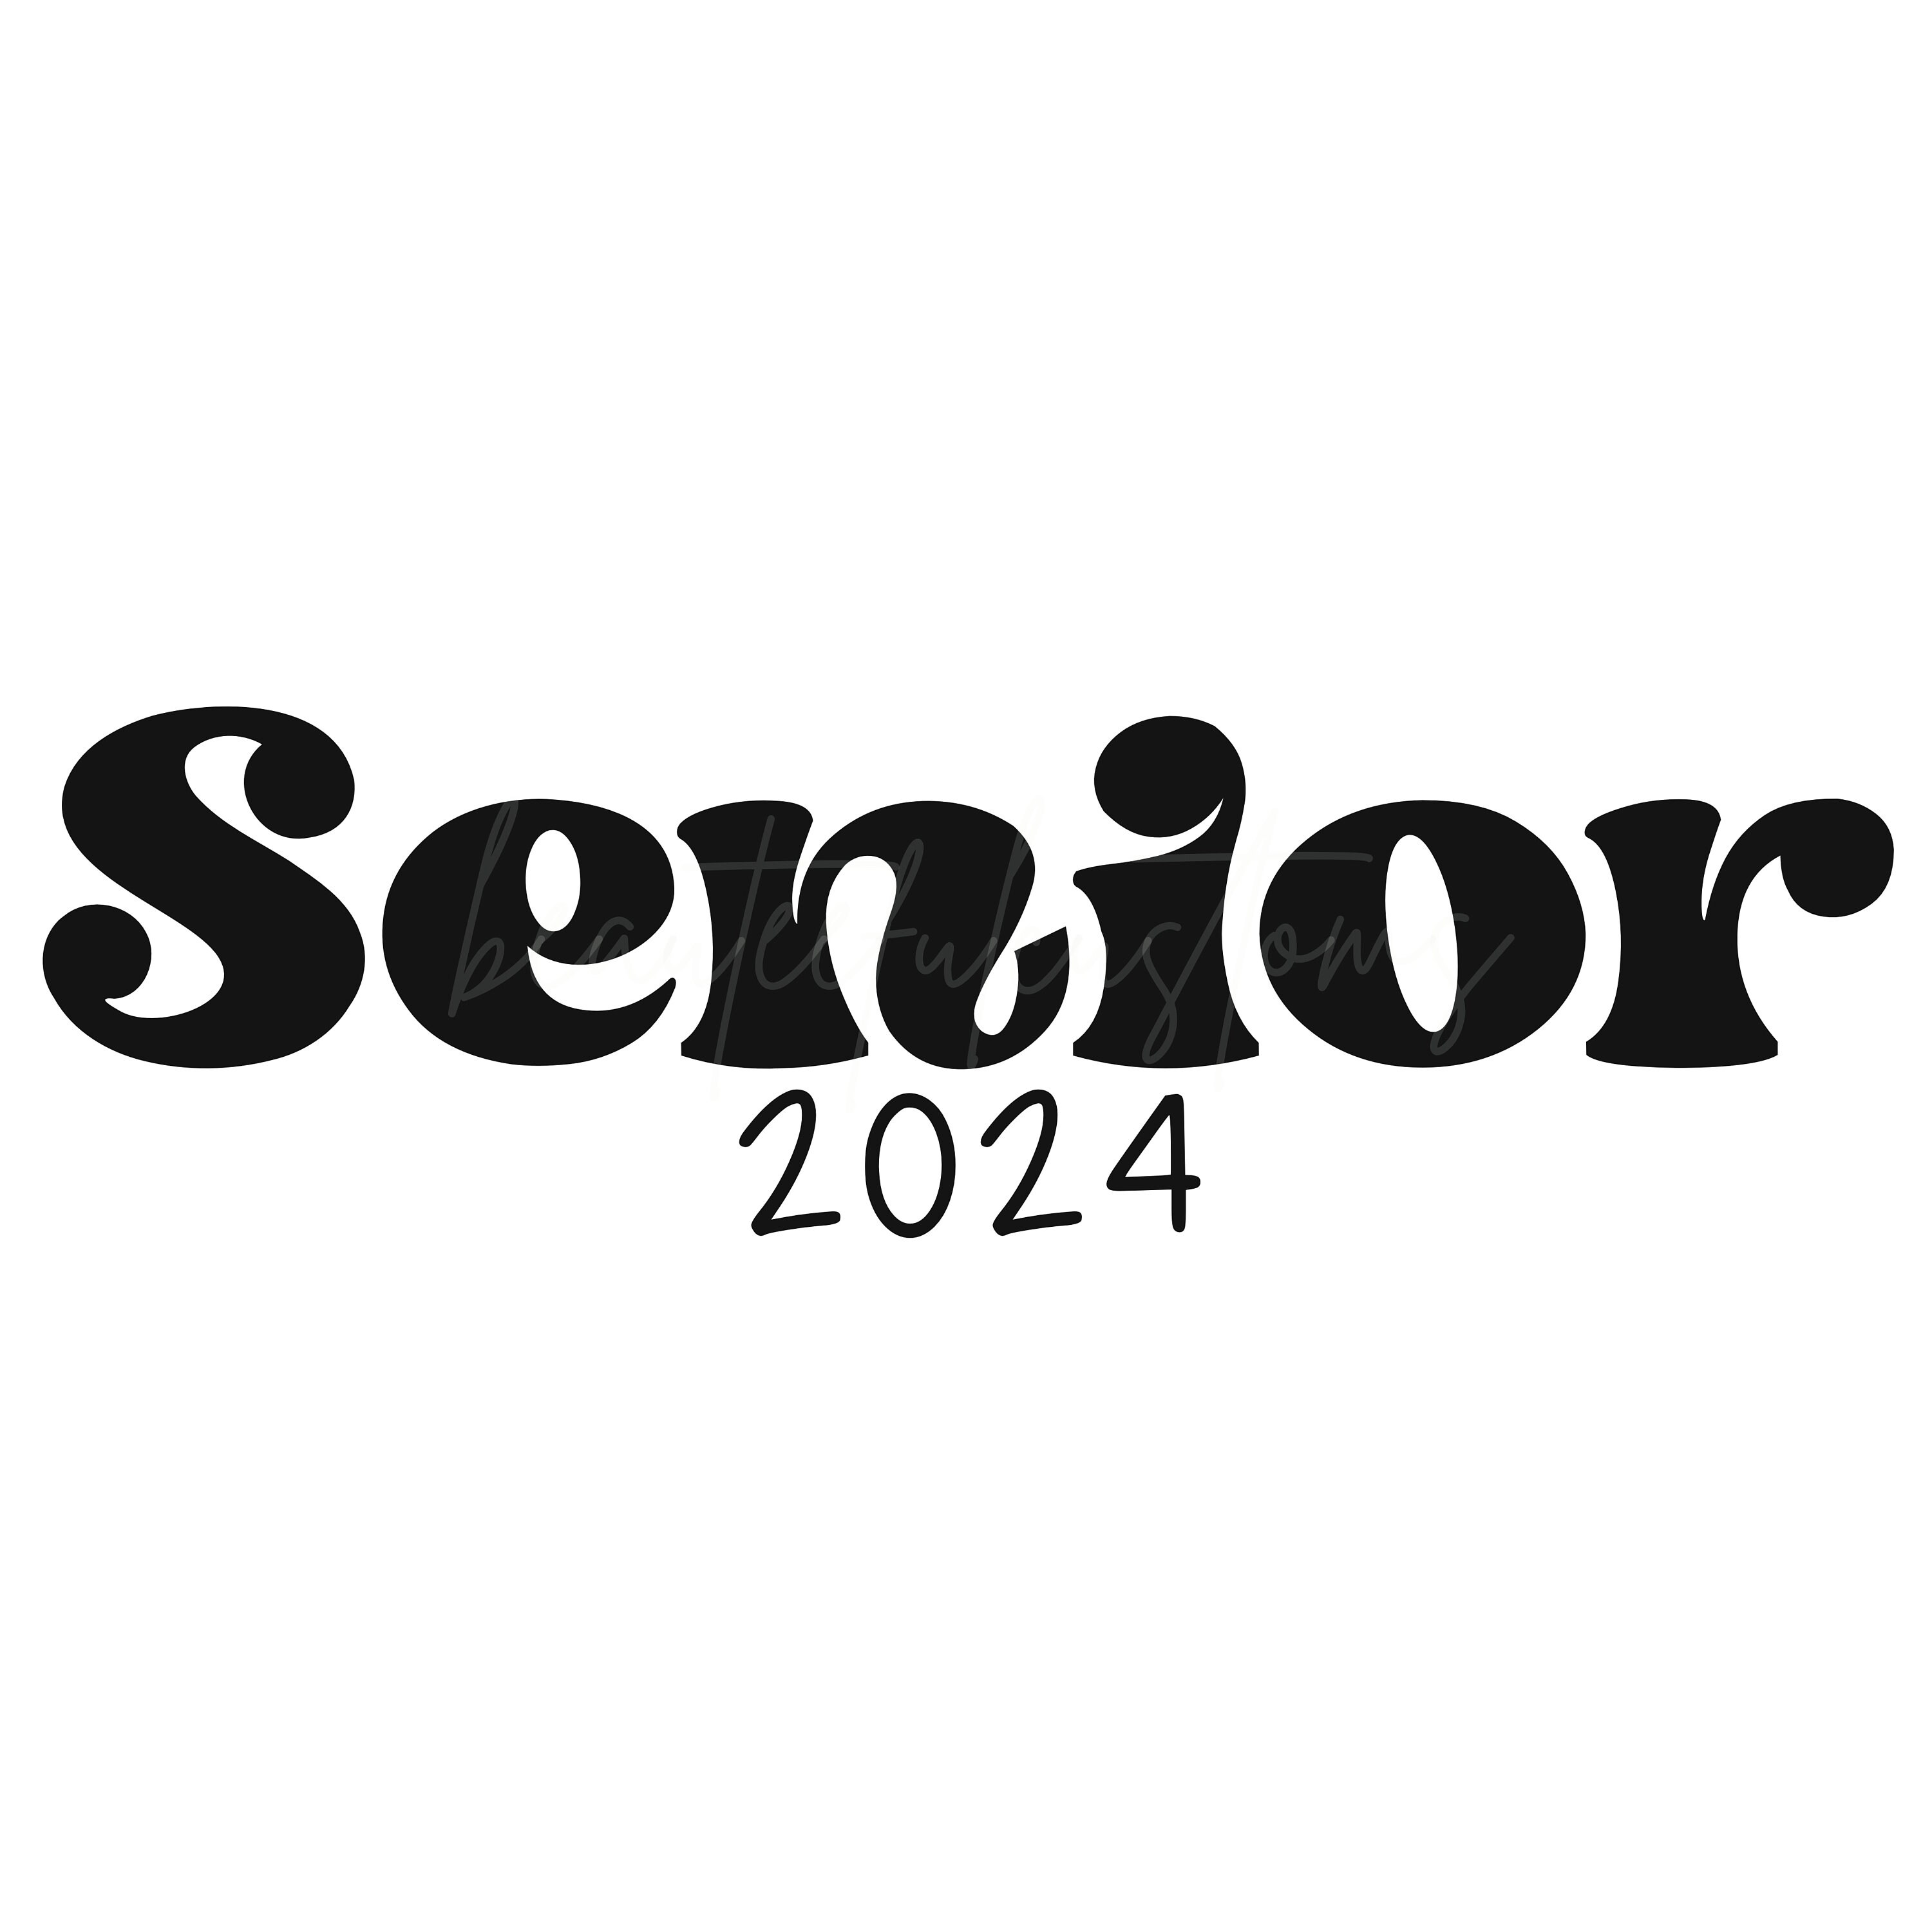 Senior 2024 SVG Senior 2024 PNG Senior 2024 Graduation Png Etsy